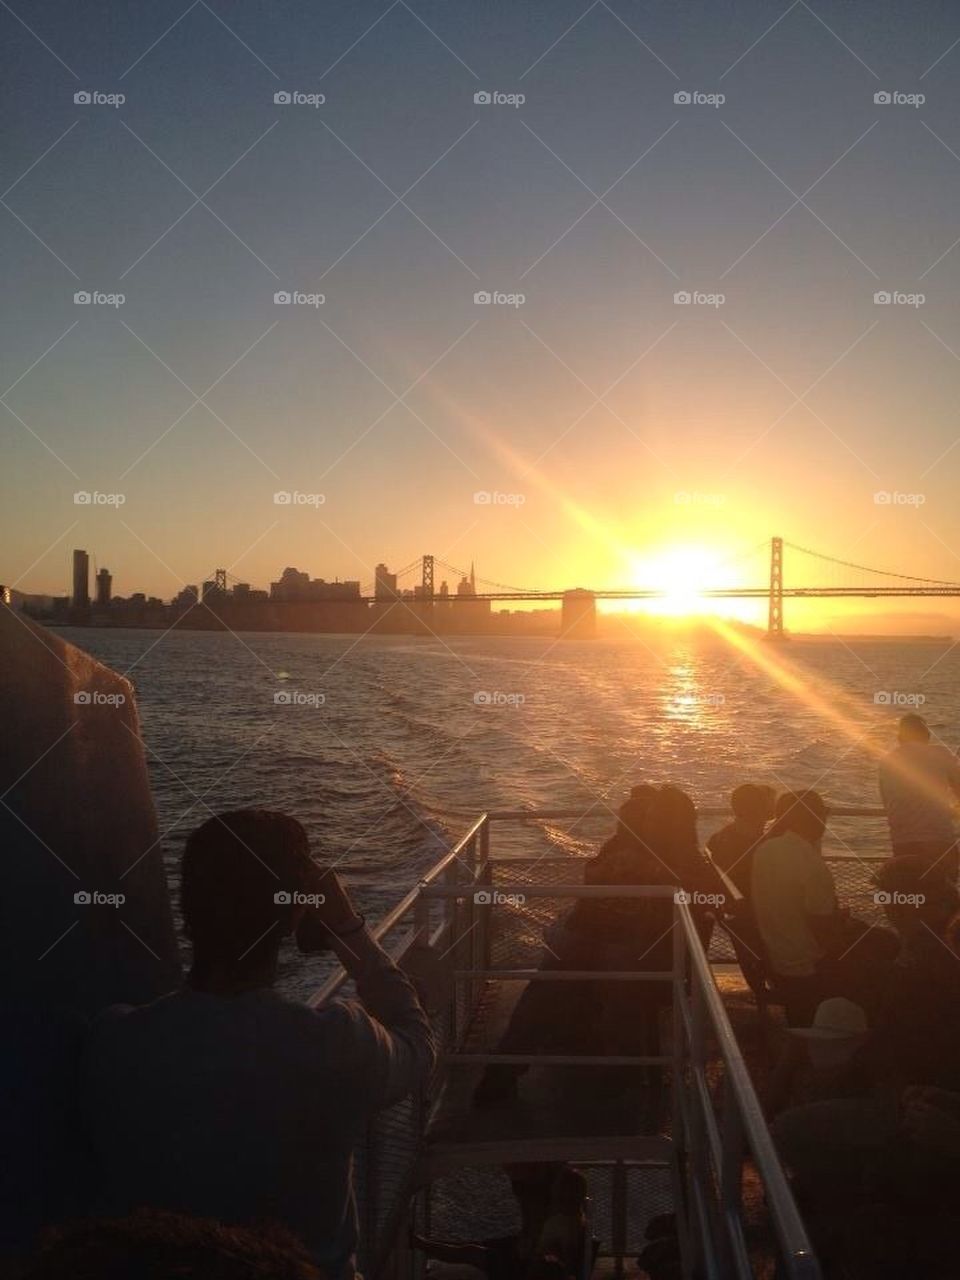 San Francisco Bay Area ferry ride.